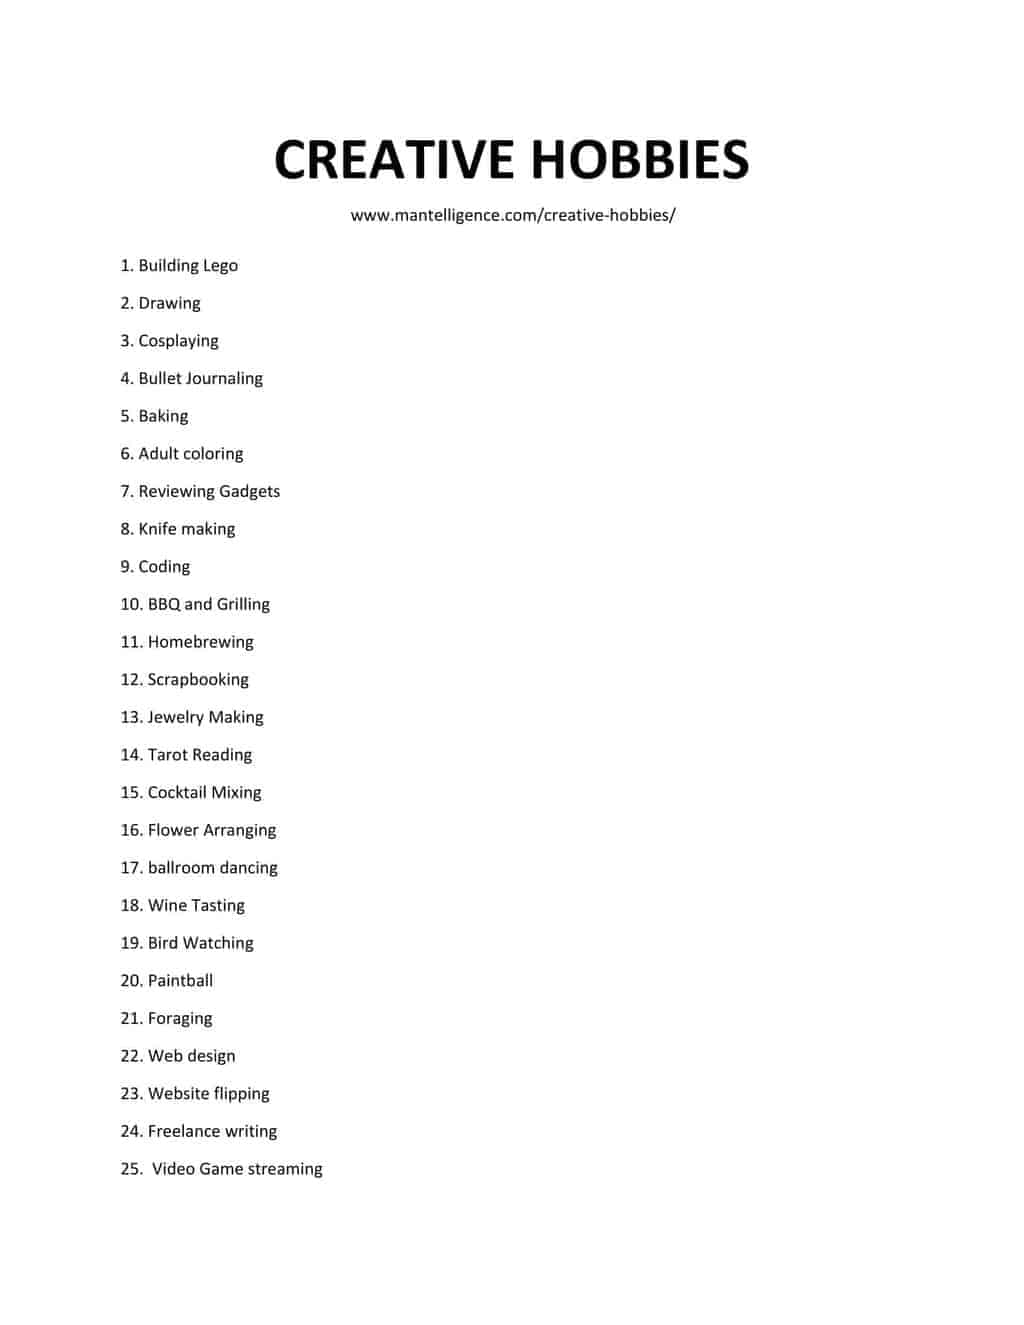 LIST OF CREATIVE HOBBIES